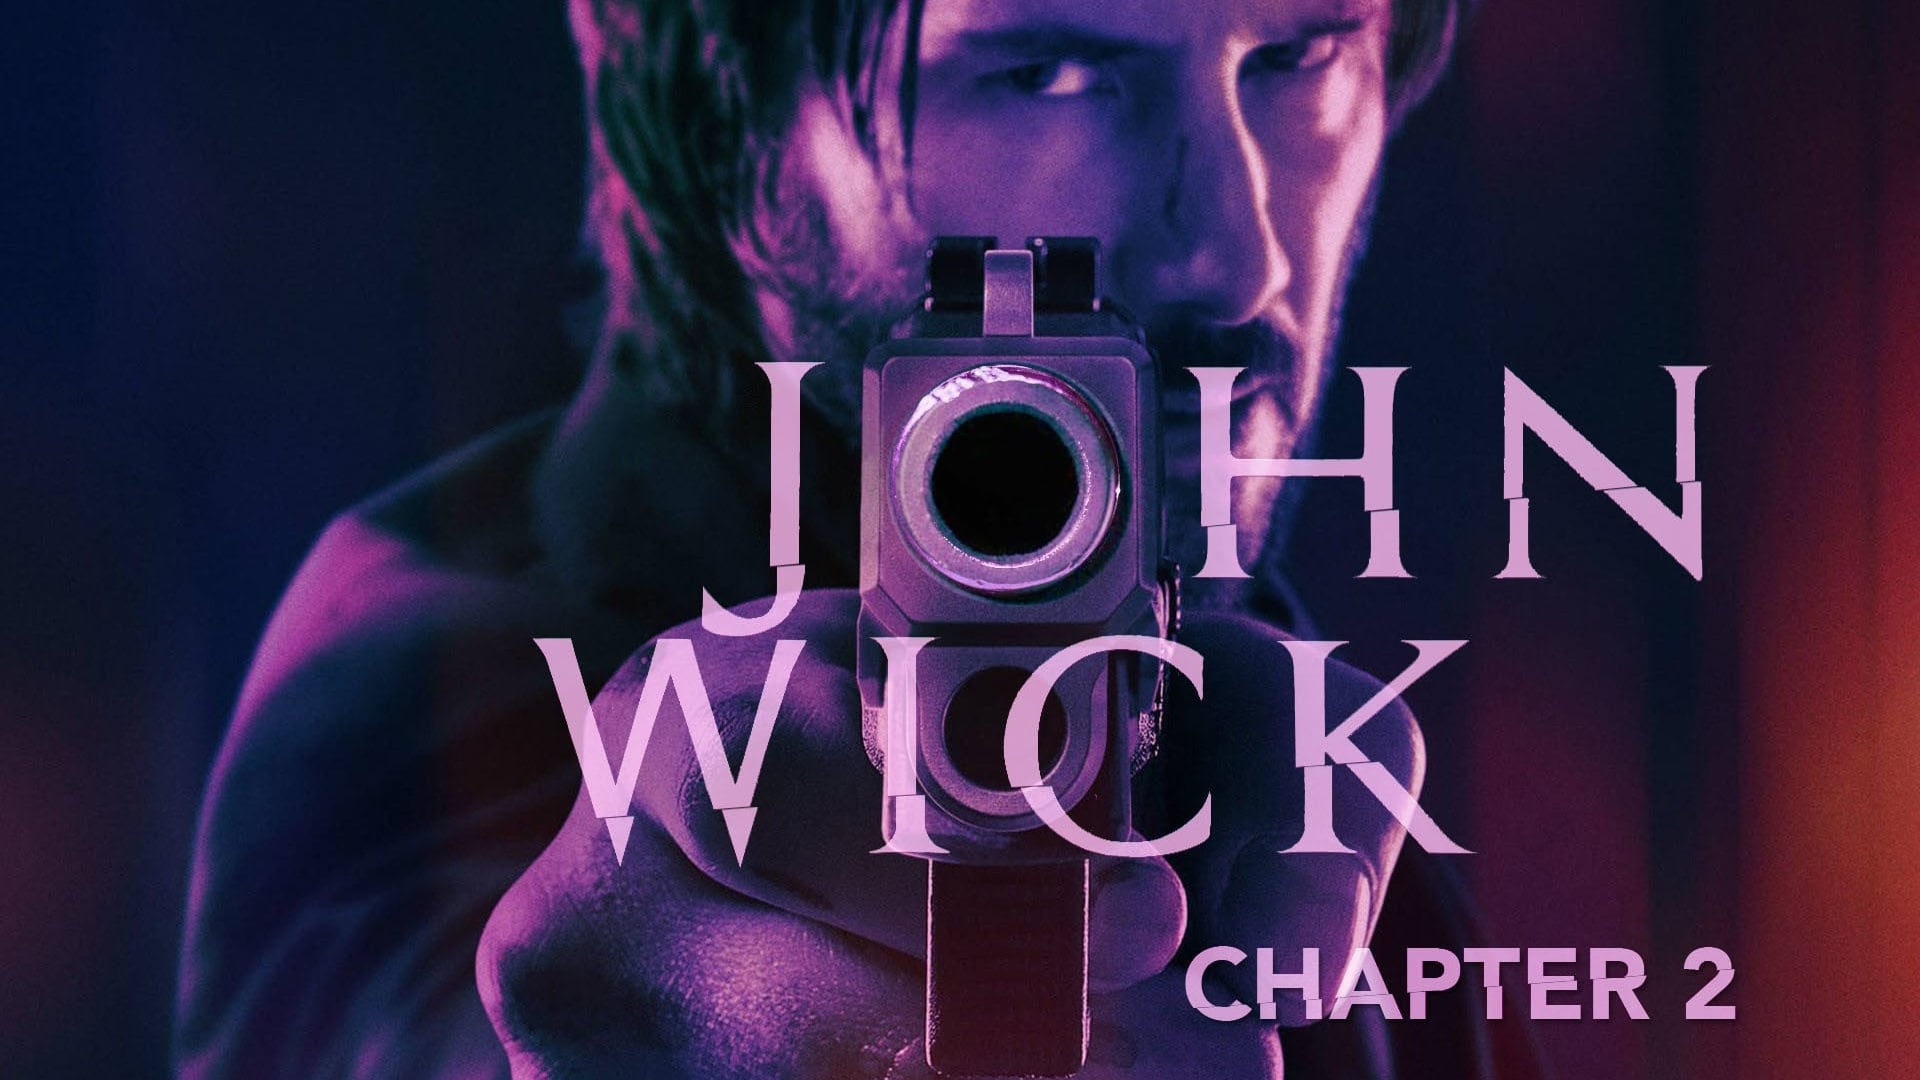 John Wick 2: Un nuevo día para matar